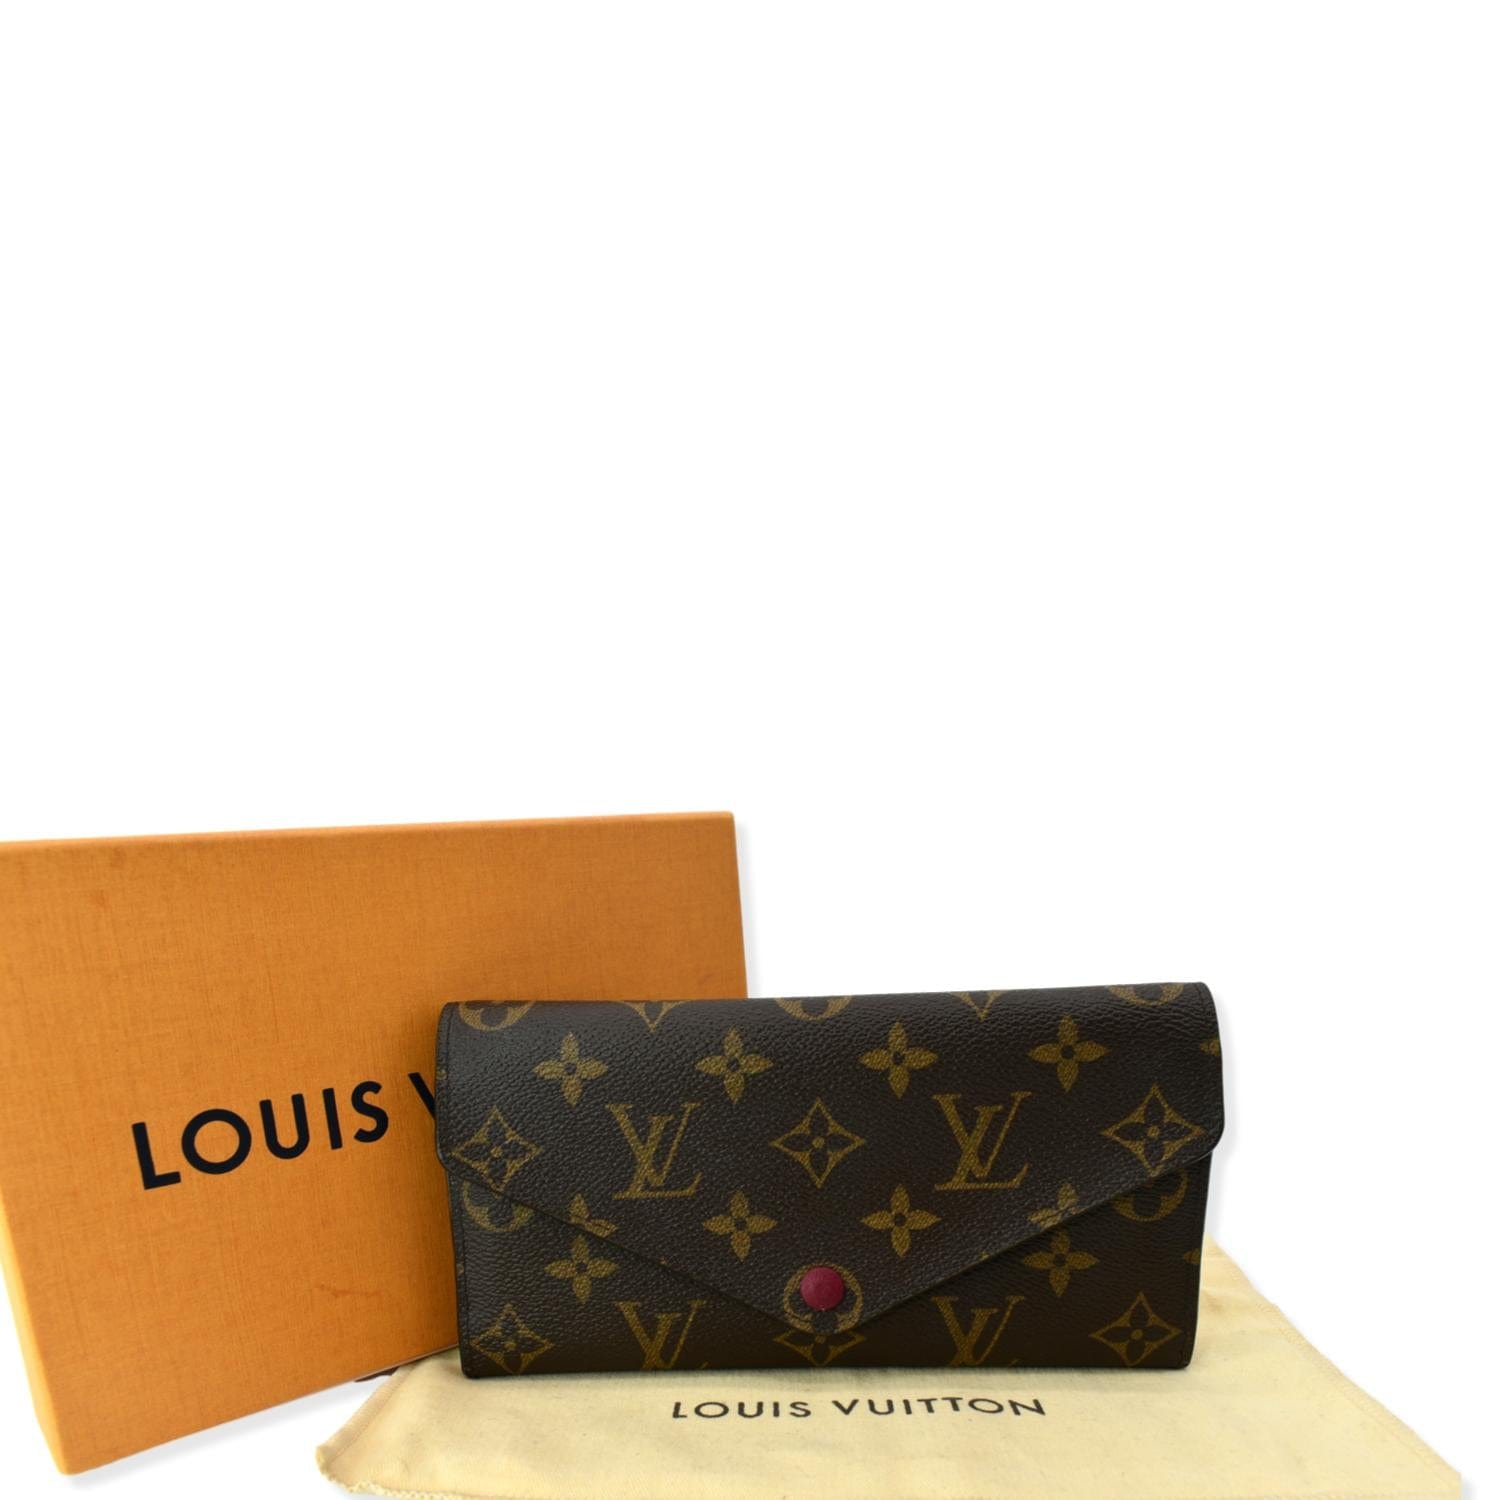 Louis Vuitton Brown Wallet 60017 19x10cm for Sale in Houston, TX